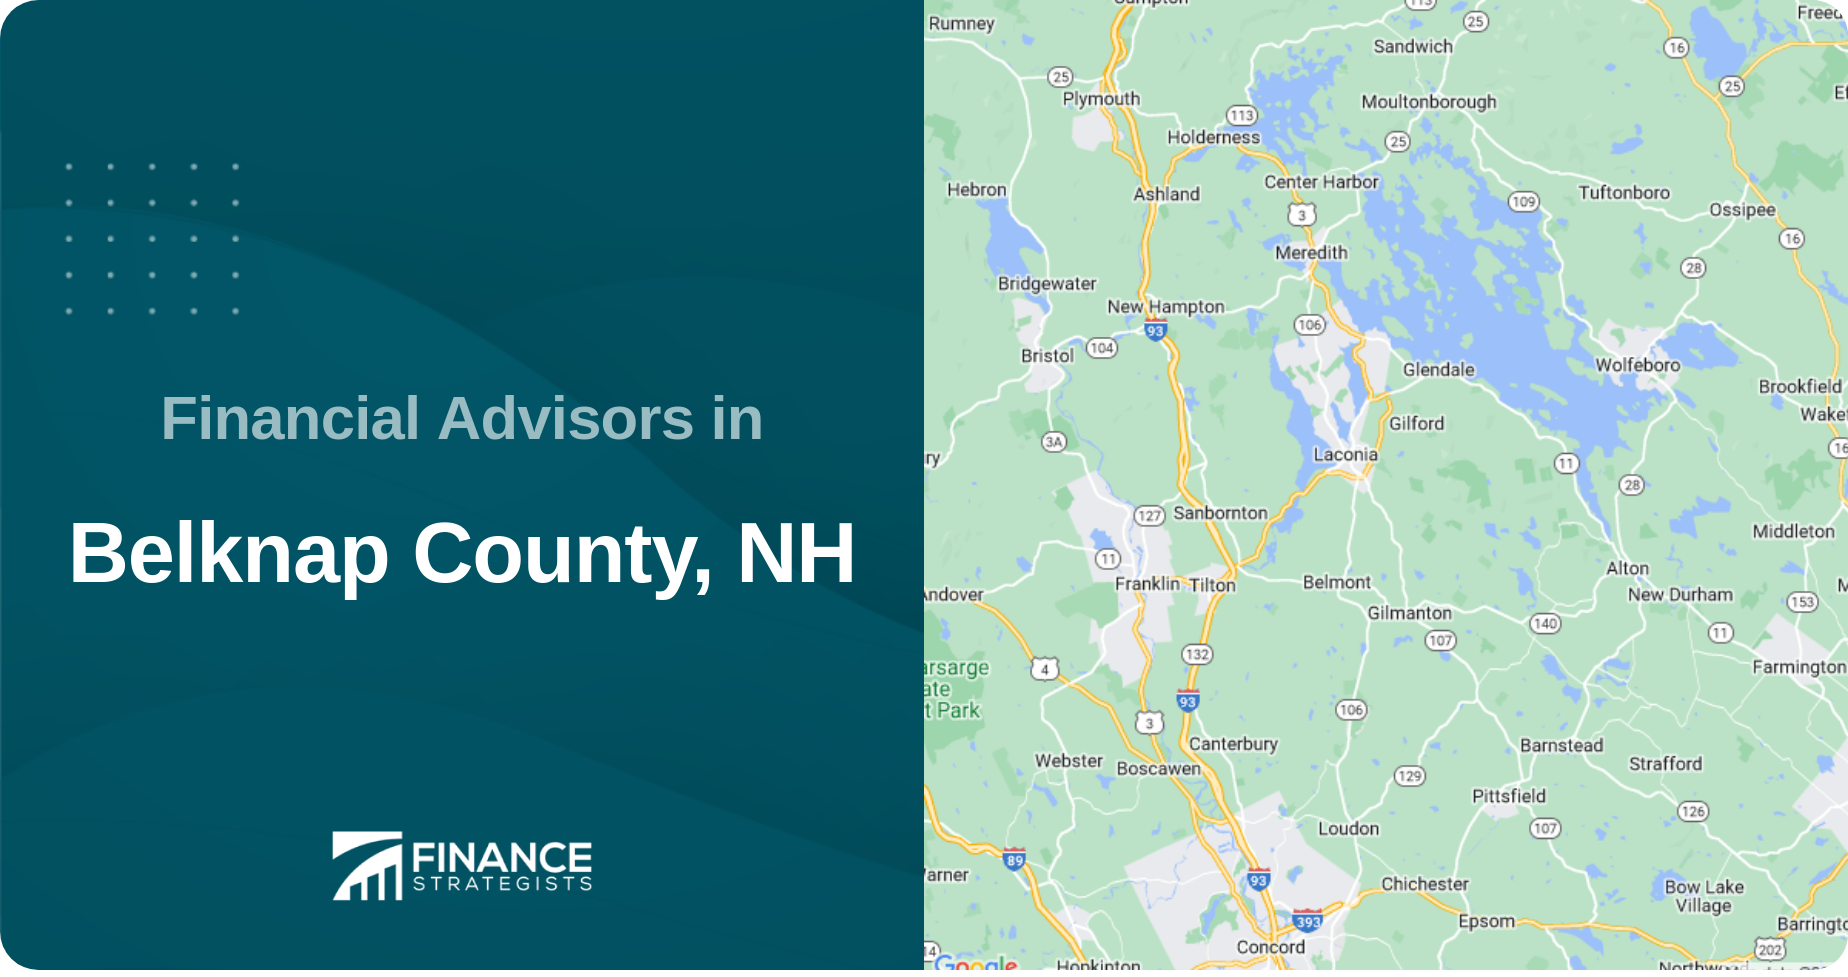 Financial Advisors in Belknap County, NH